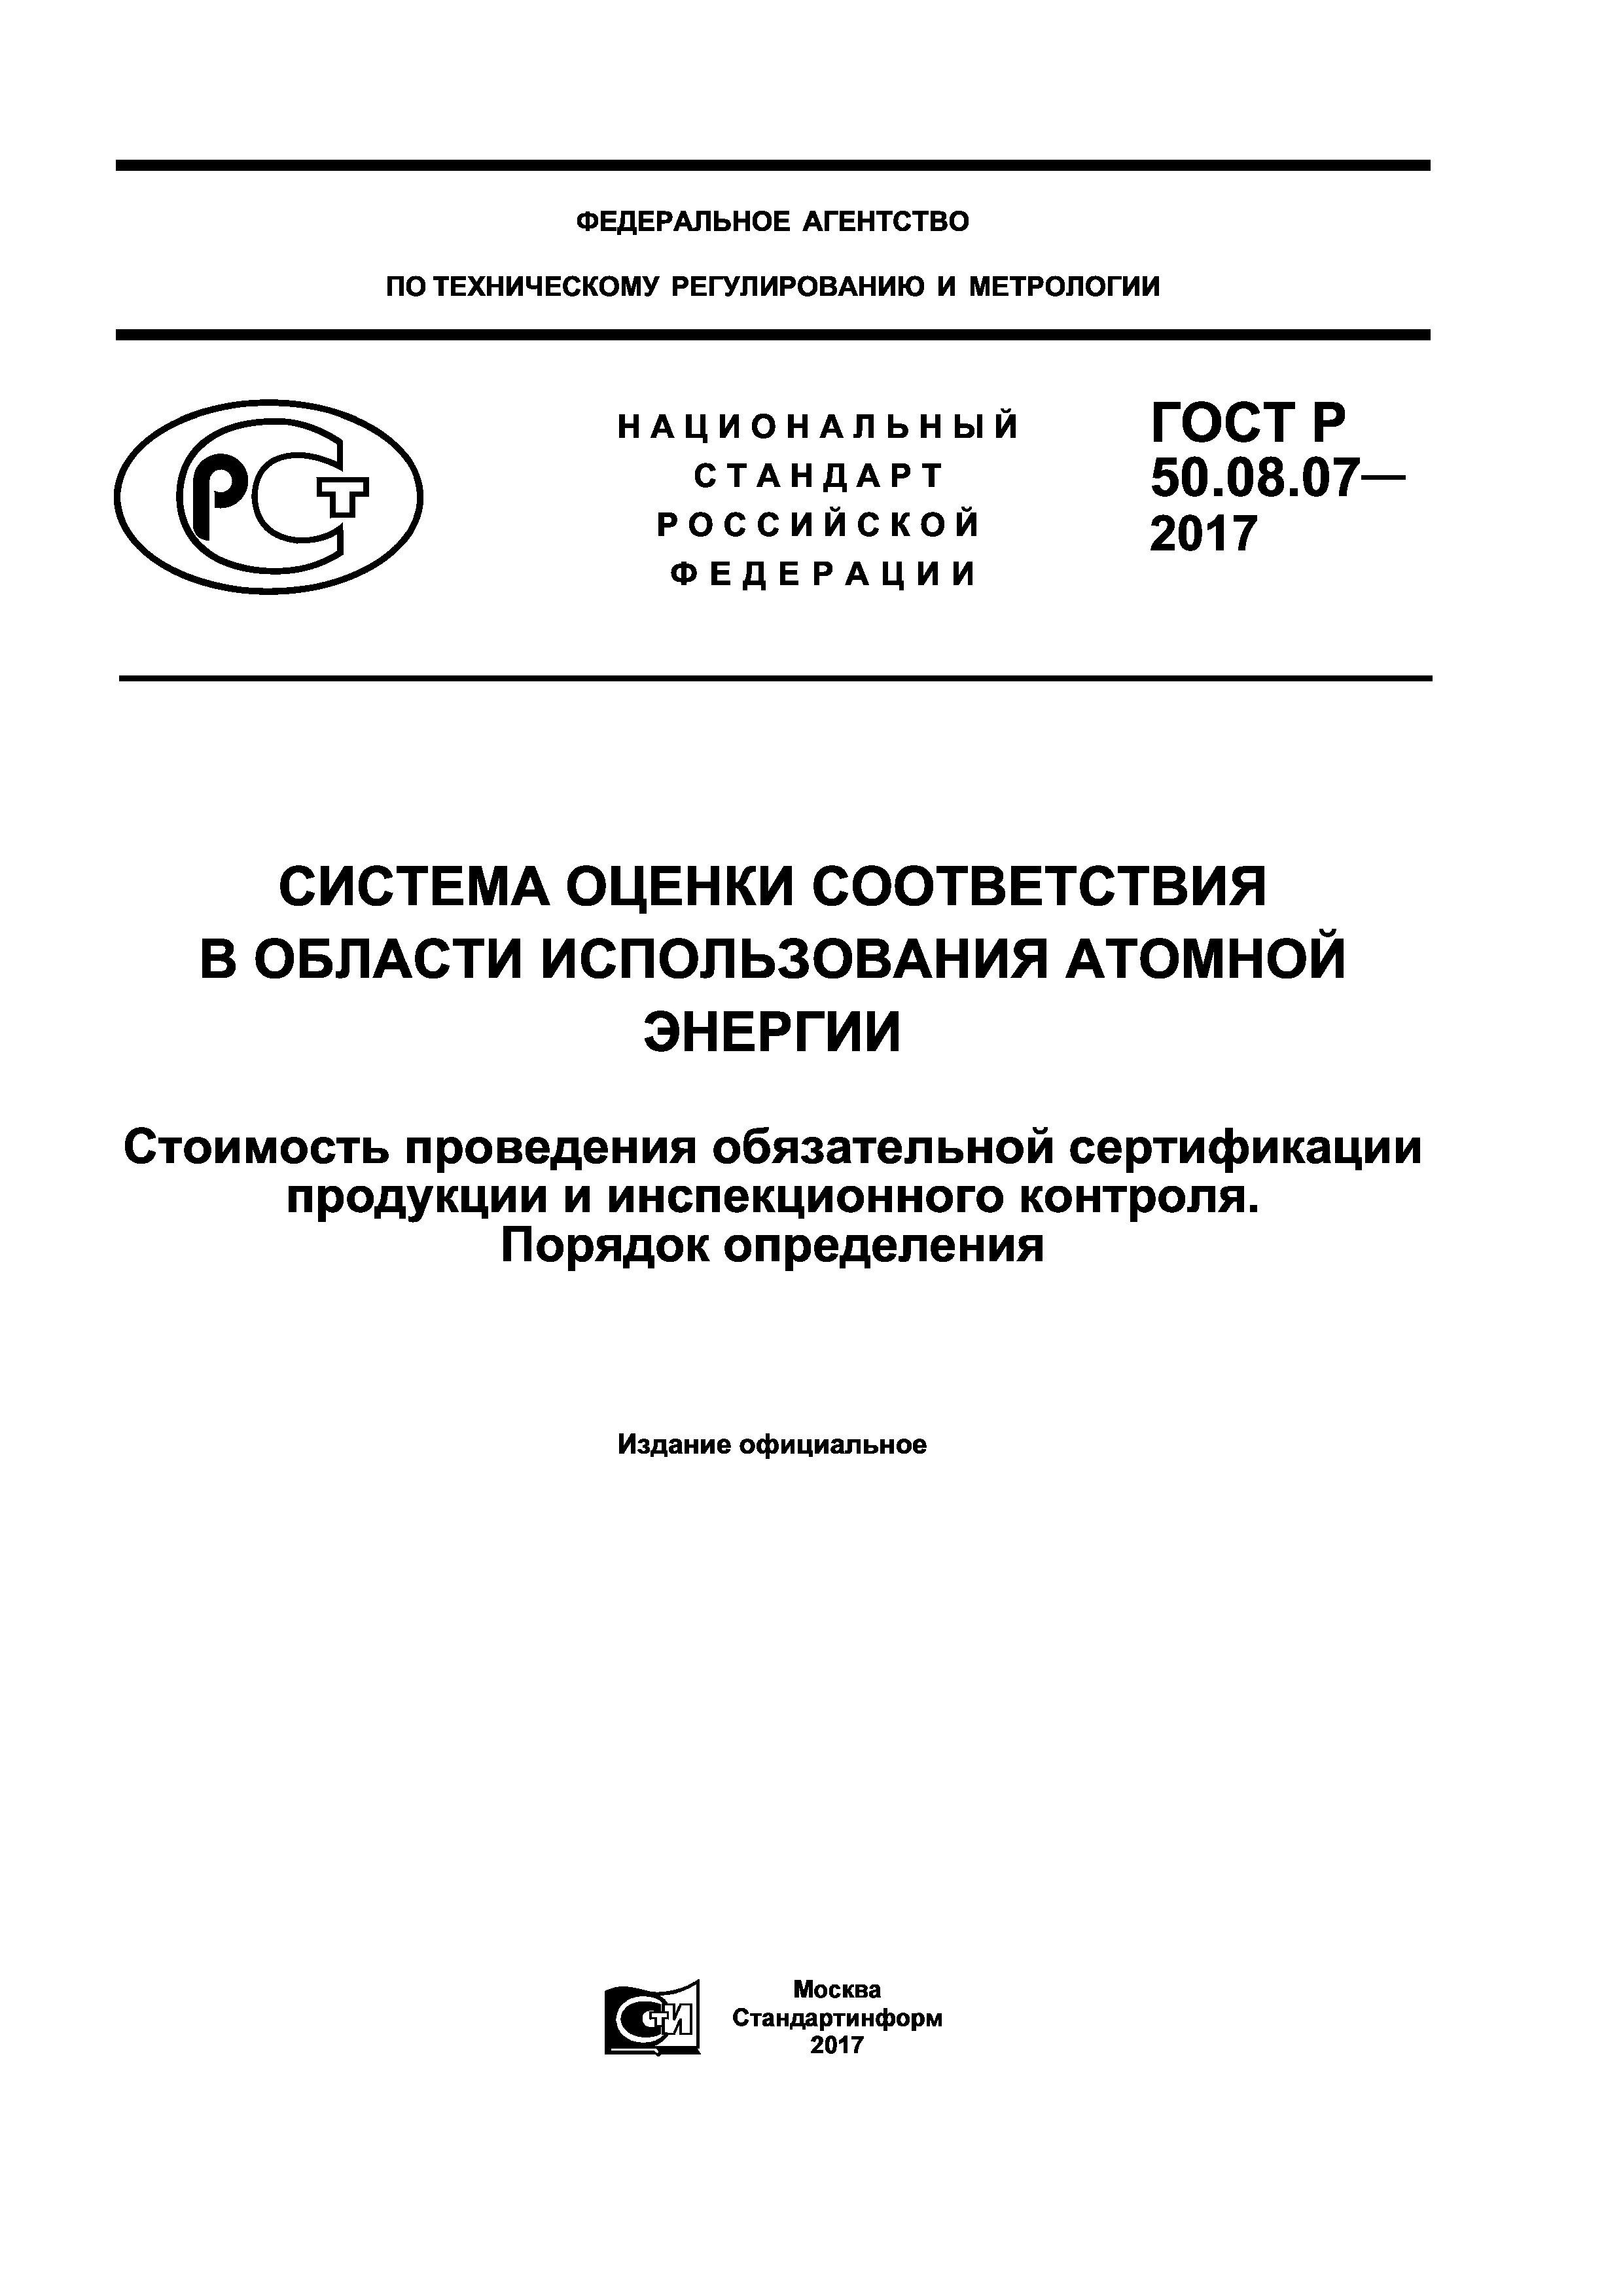 ГОСТ Р 50.08.07-2017